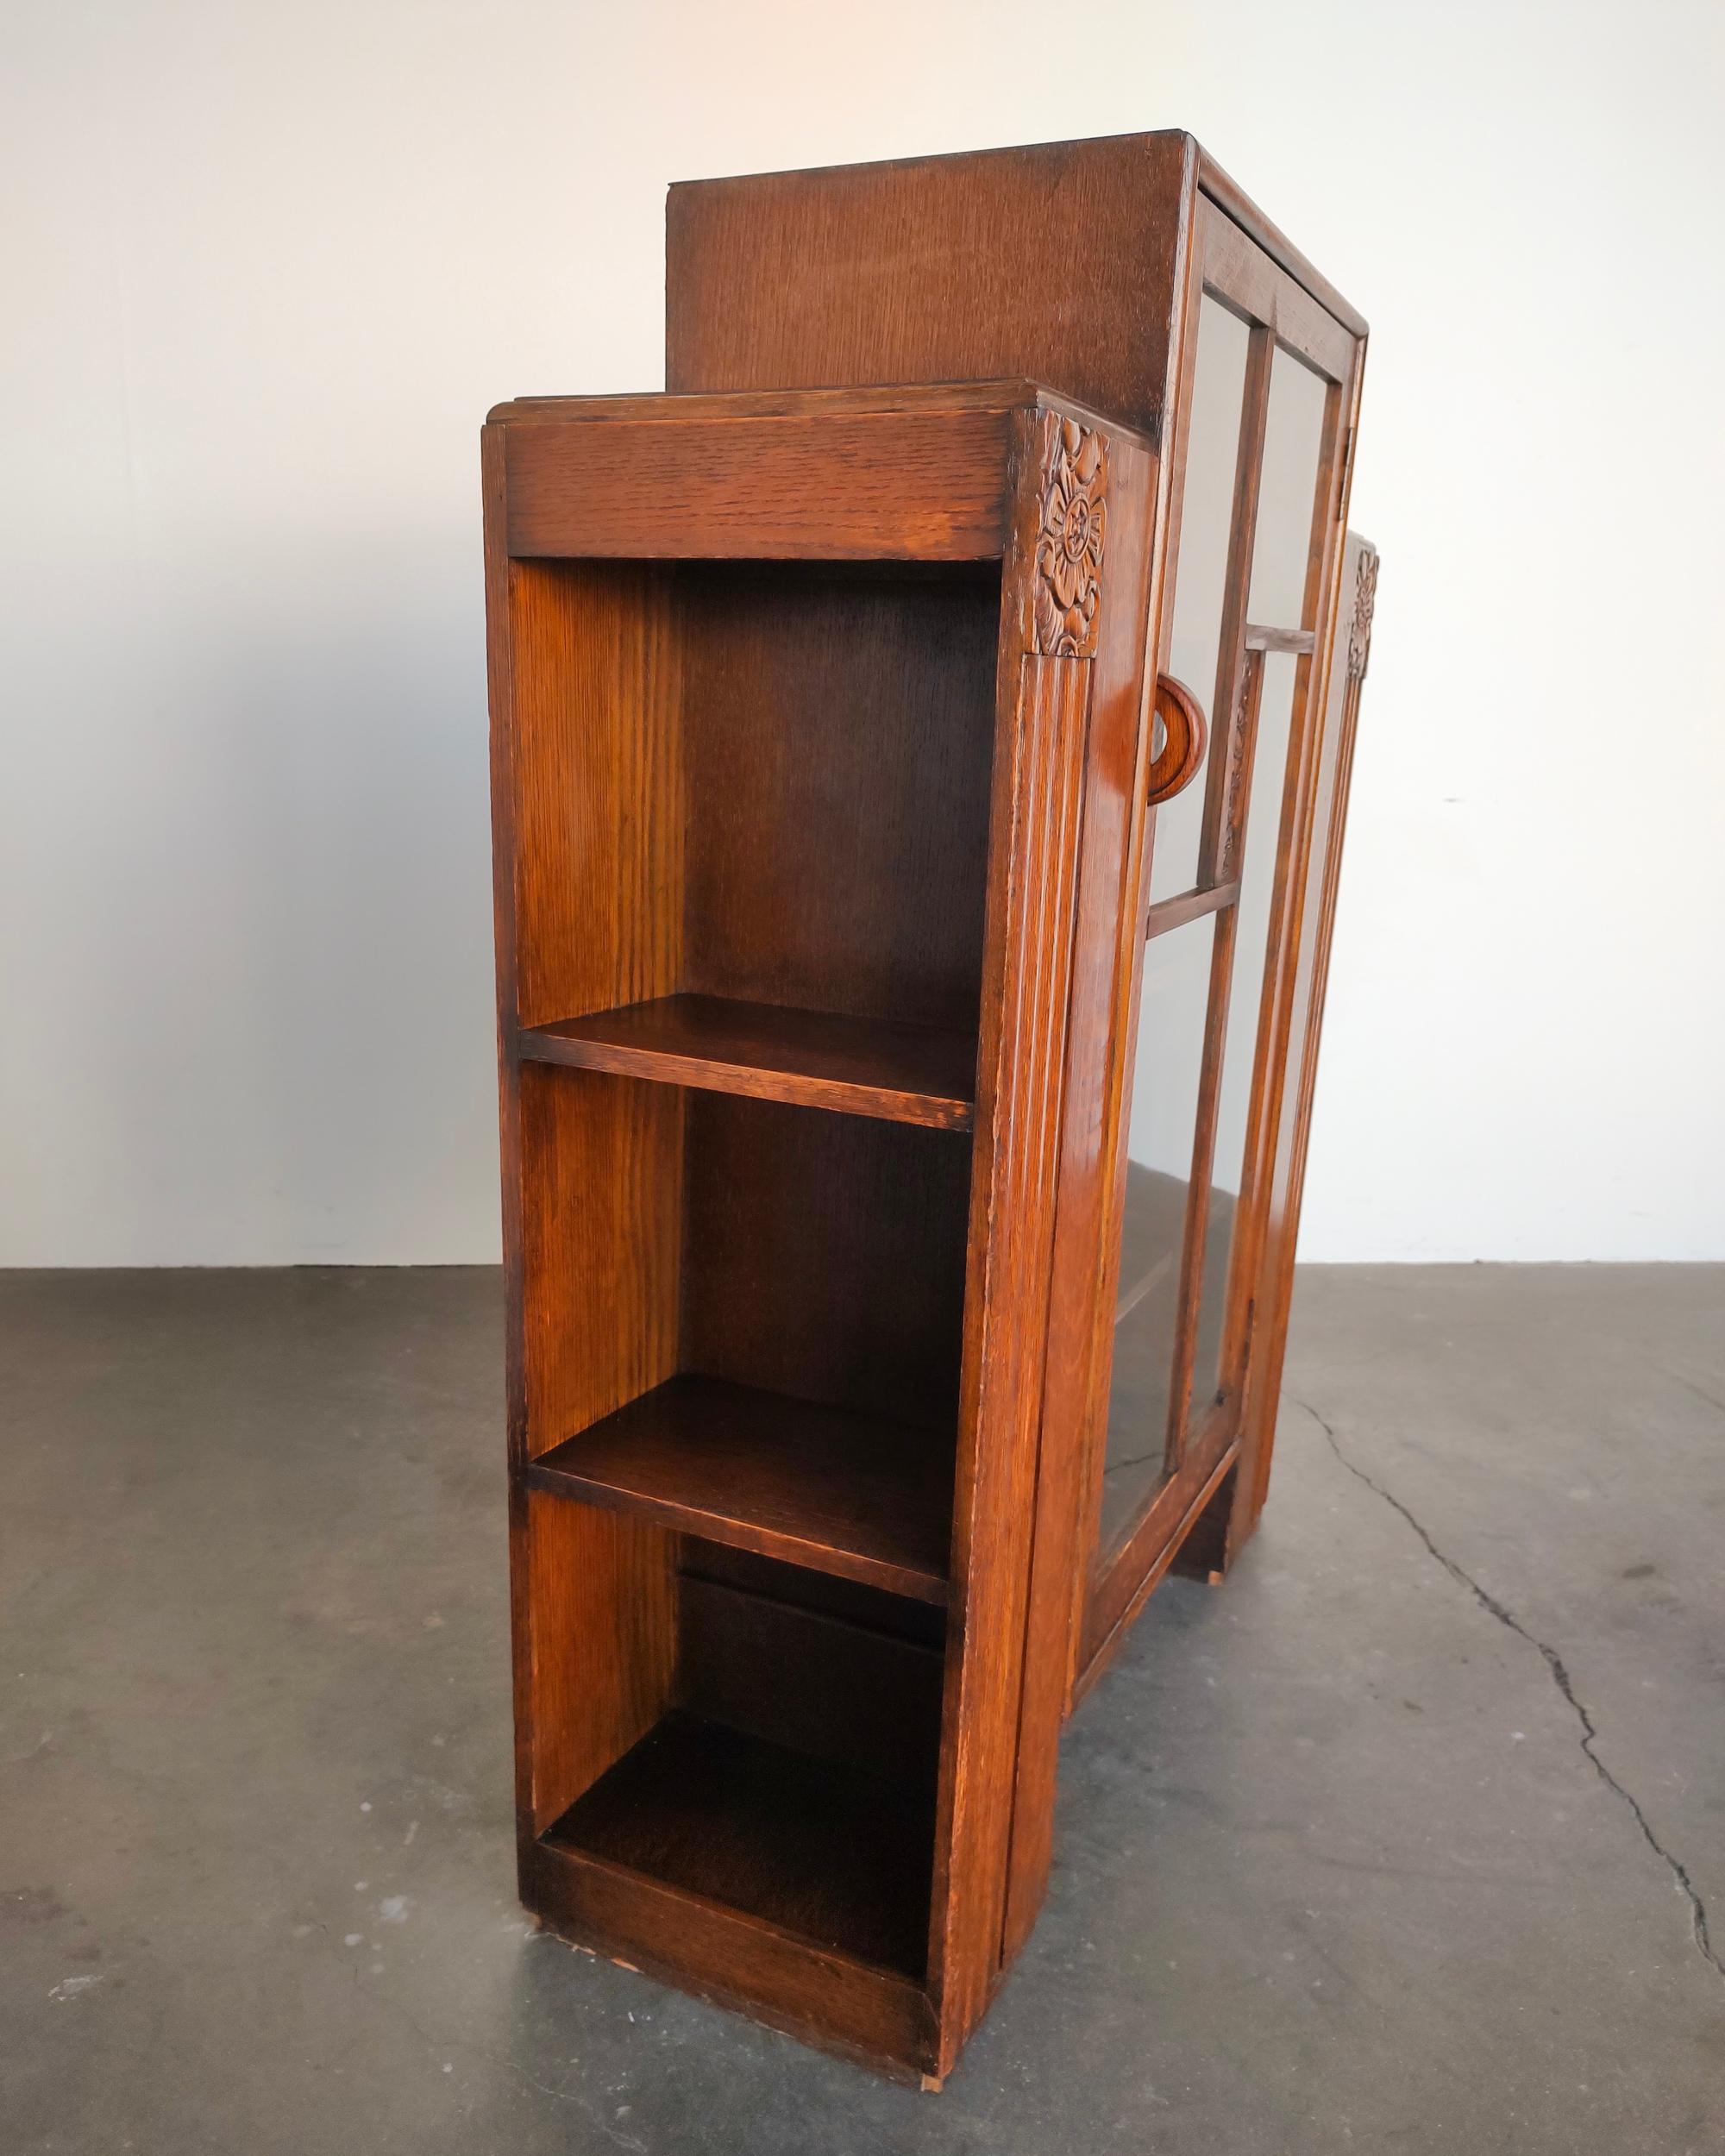 Tiger Oak Art Deco Display Cabinet With Shelves by Herbert E. Gibbs 1930s 6